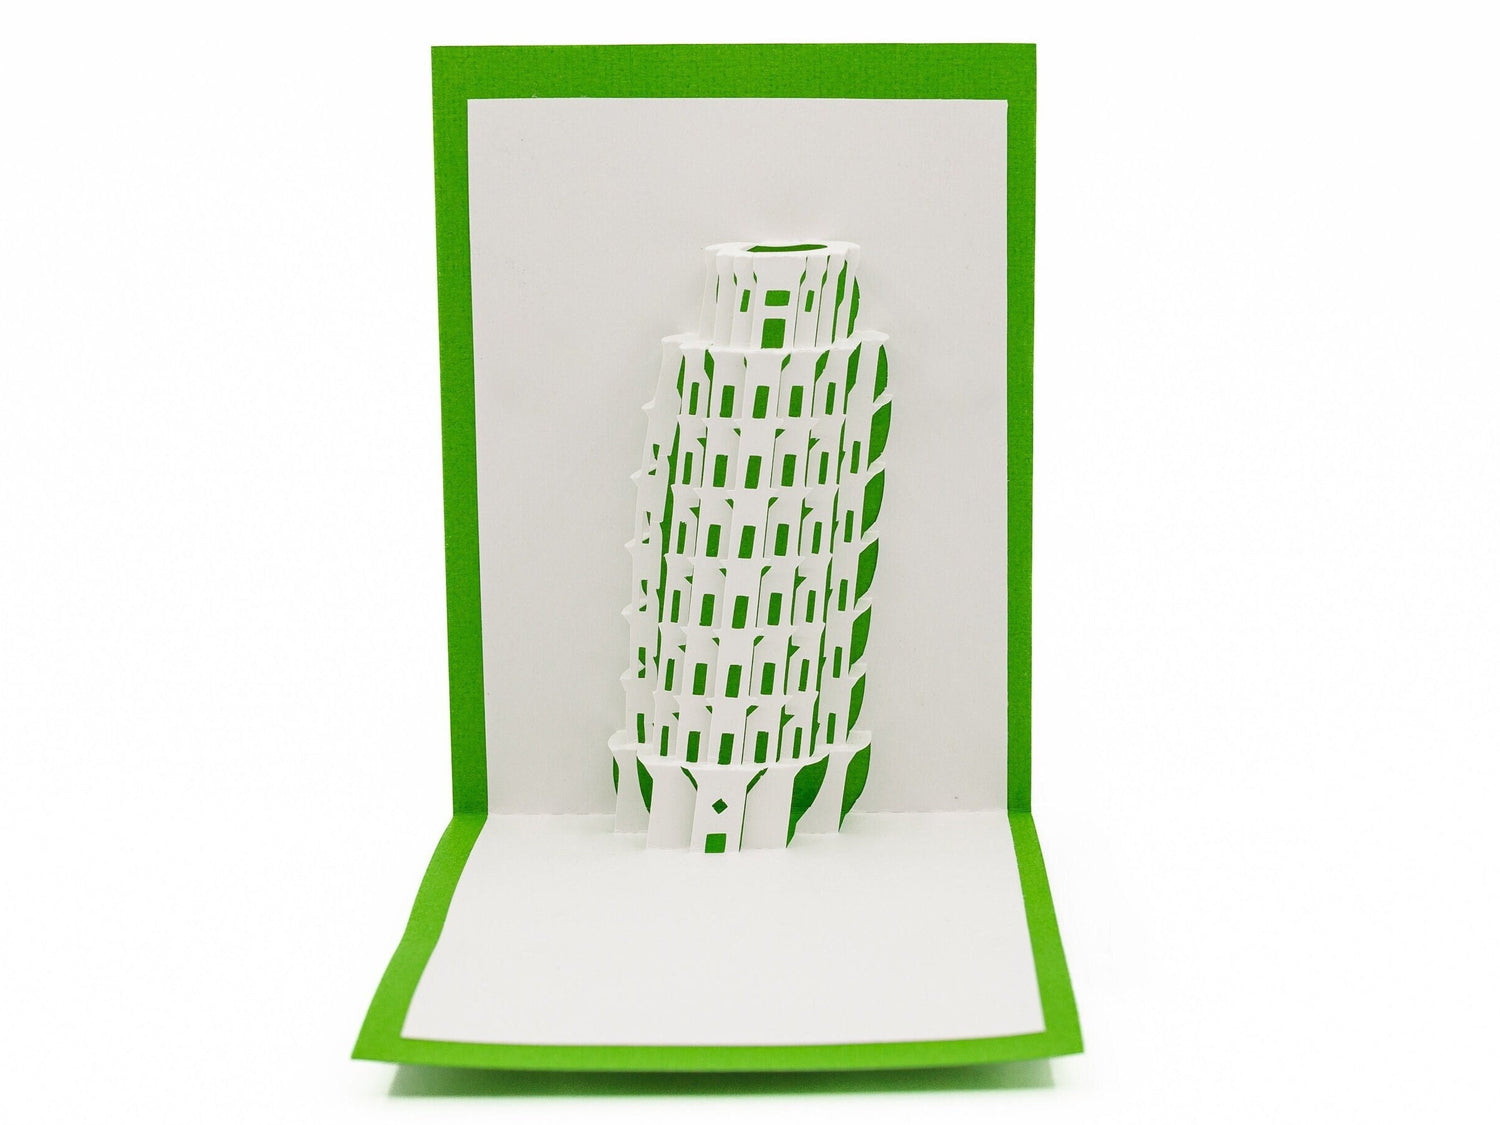 Leaning Tower of Pisa 3D Pop Up Card | Italian Architecture Decor  | Handmade Special Gift | Travel Keepsake  | Iconic Building Landmark